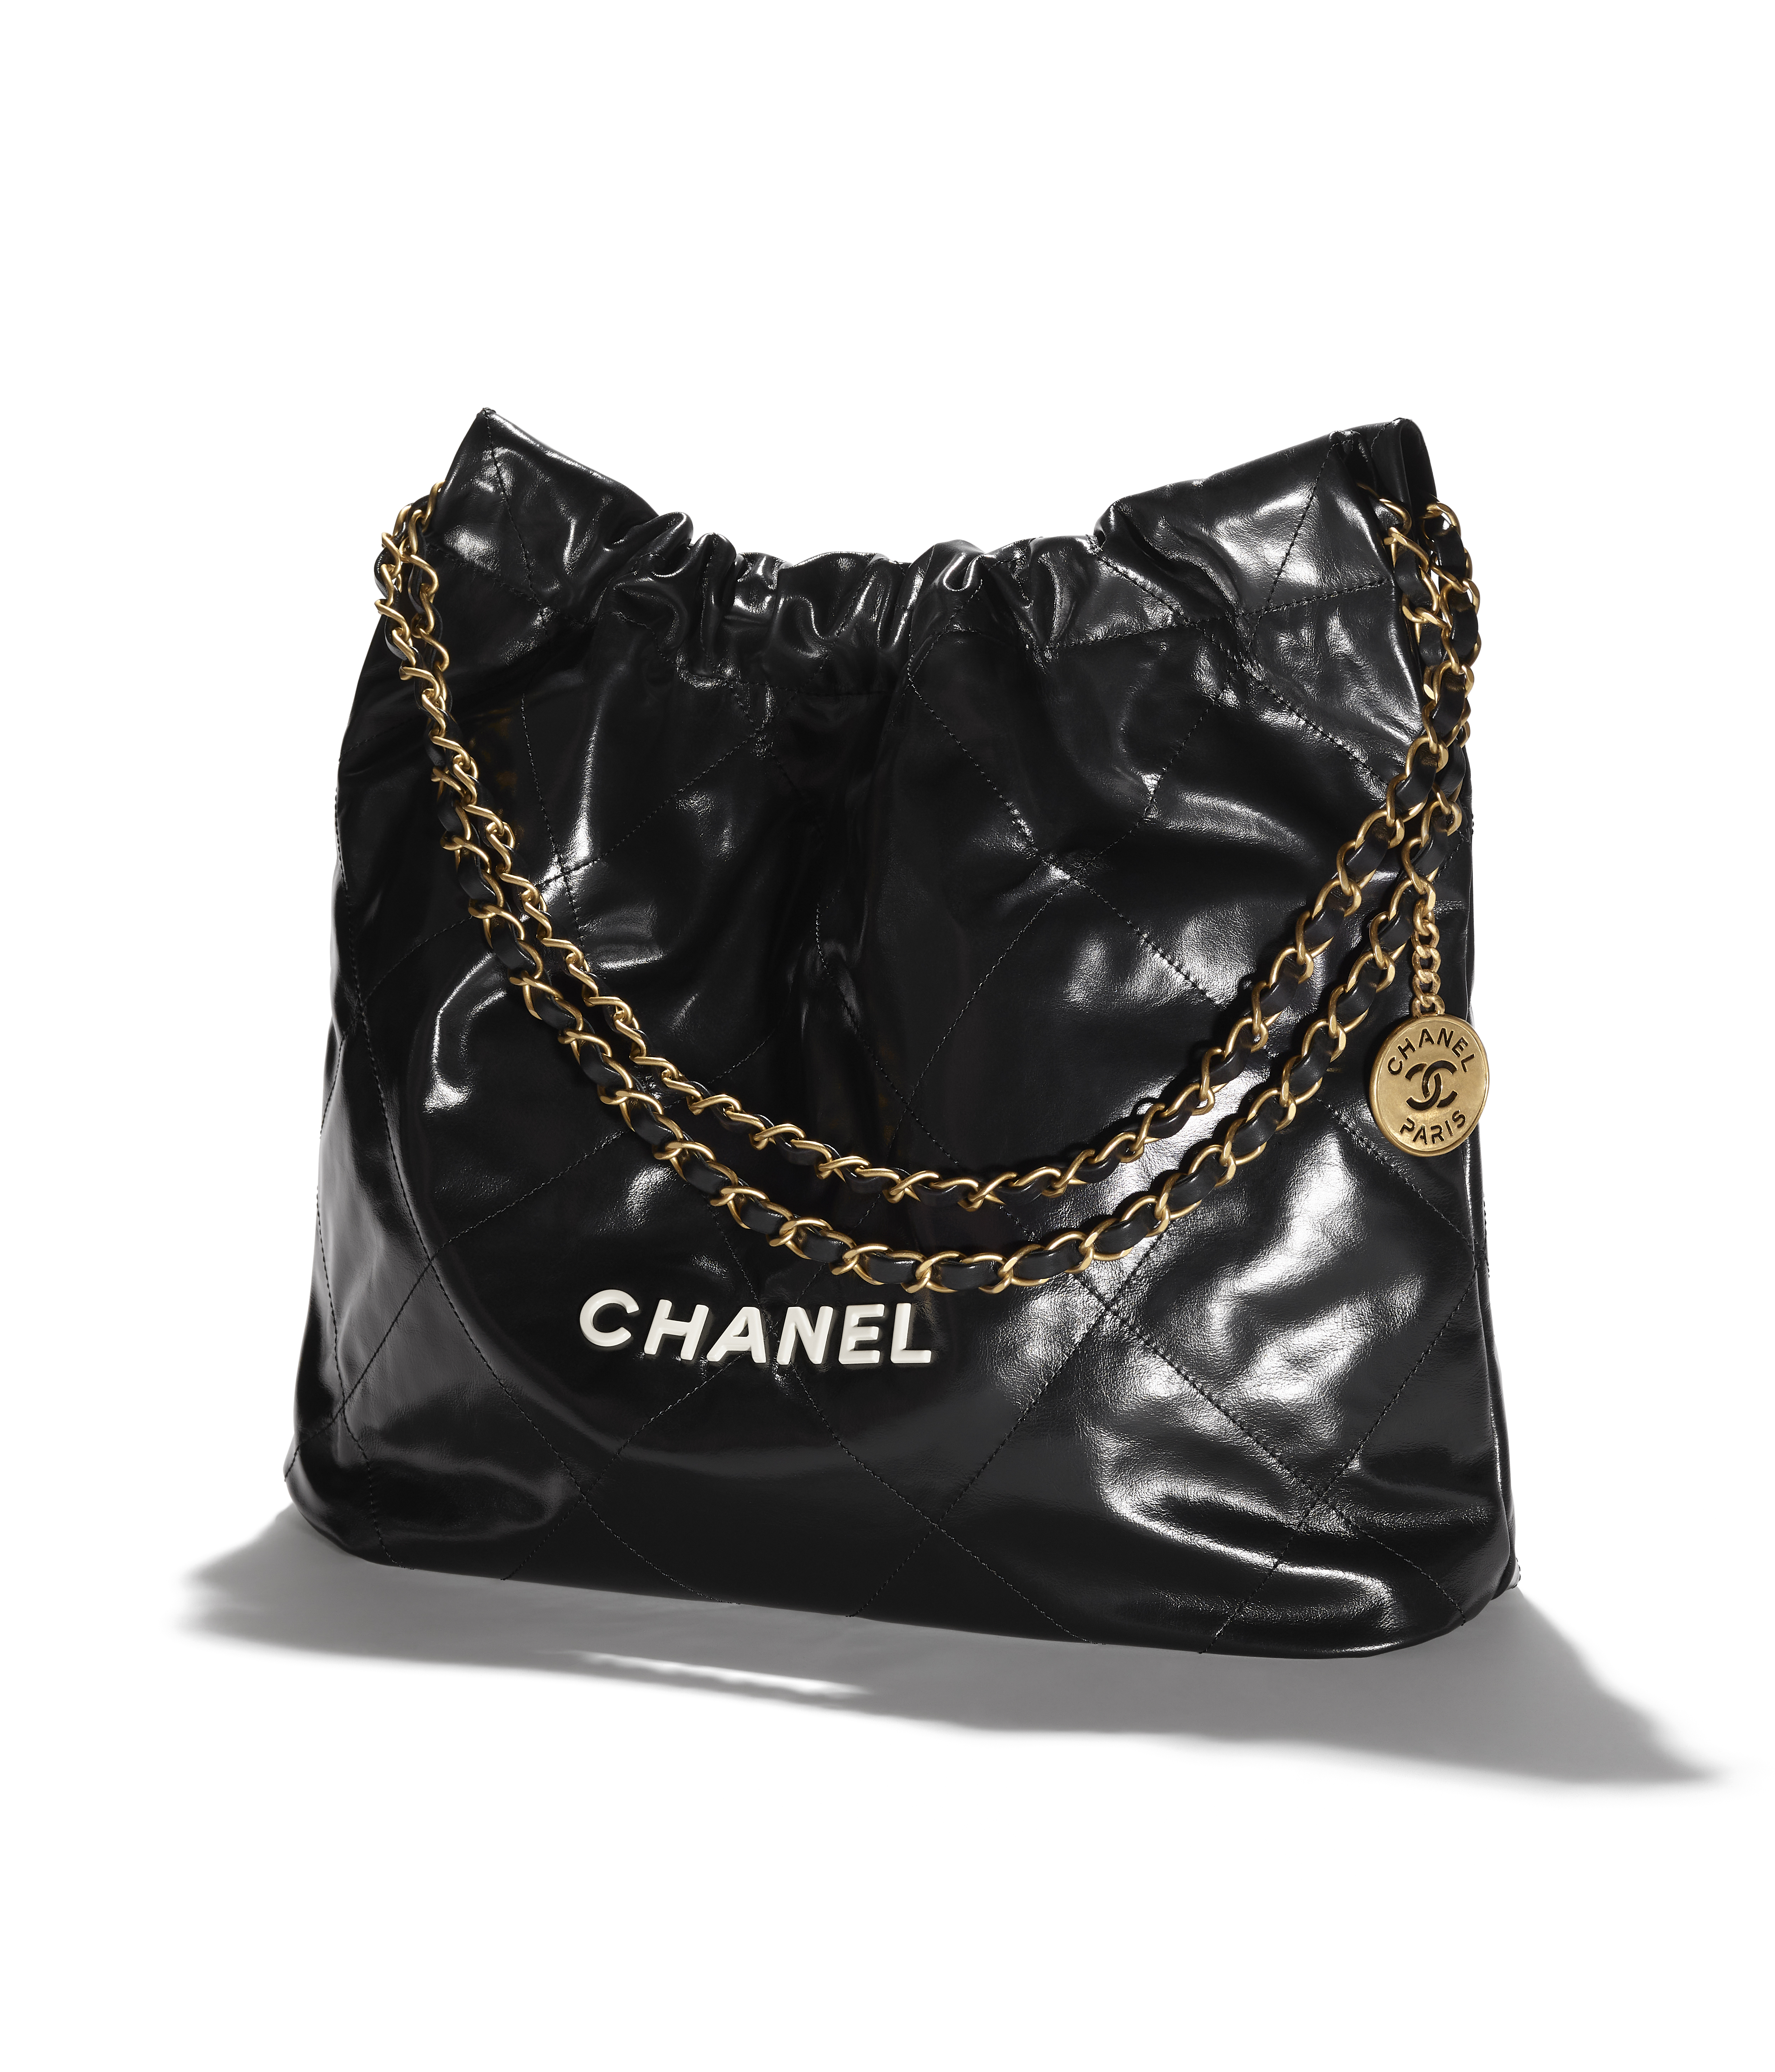 Adiós mini bolso Chanel regresa a las bolsas grandes con la Chanel 22